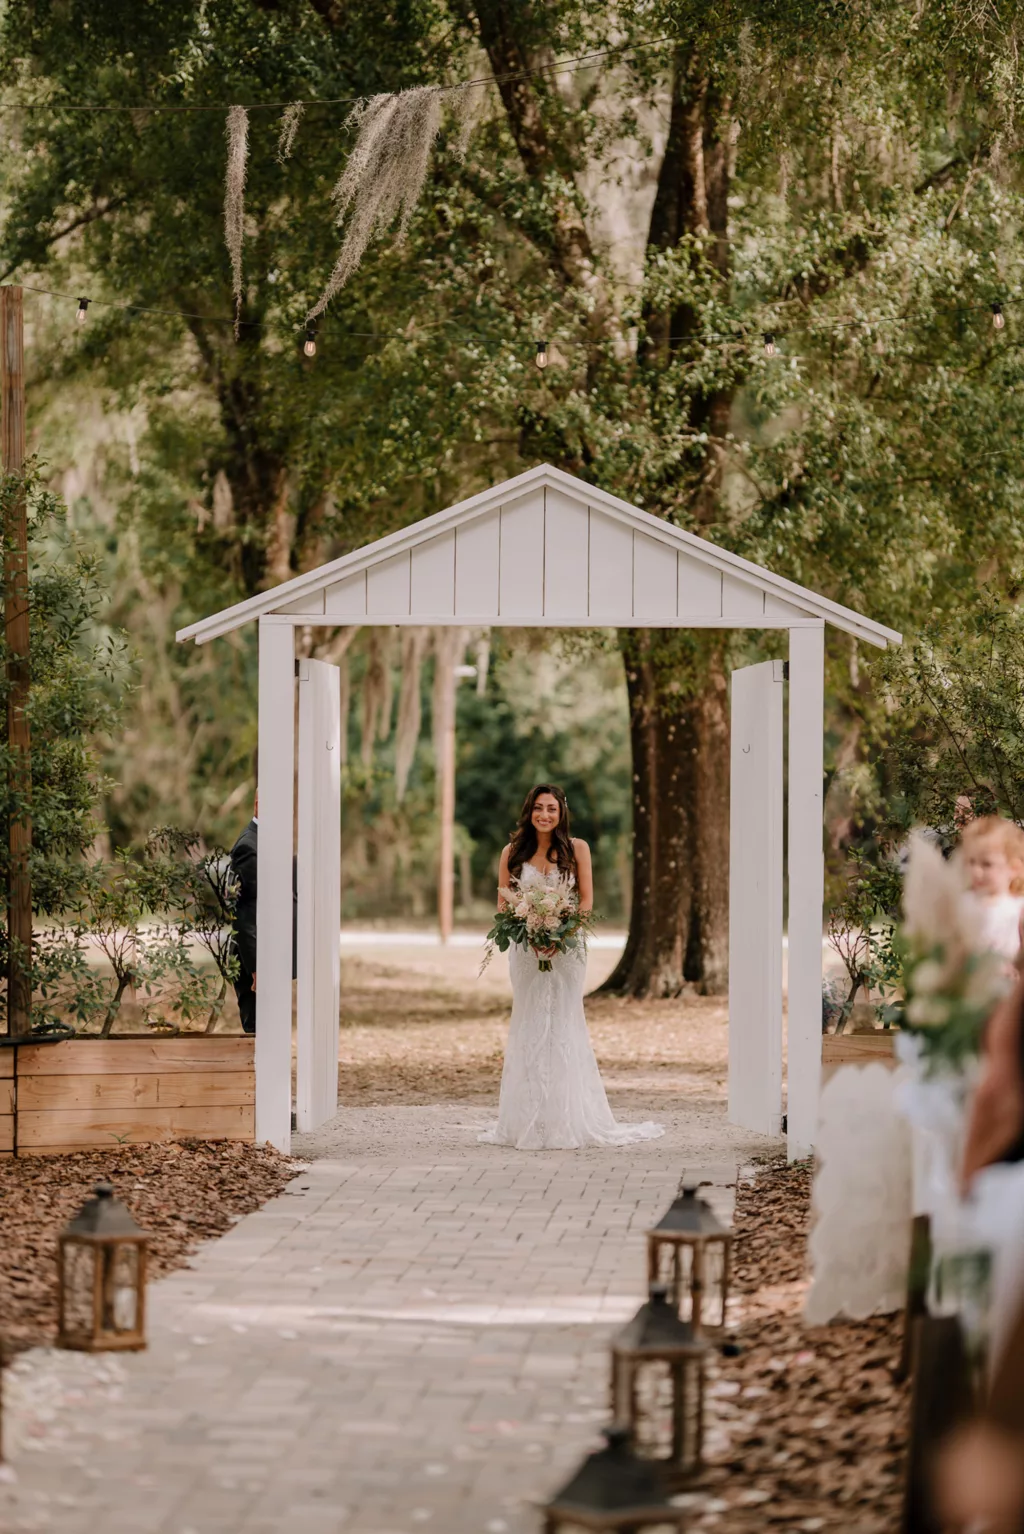 Bride Walking Down Aisle | Spring Boho Wedding Ceremony Inspiration | Florida Event Venue Ever After Farms Flower Wedding Barn